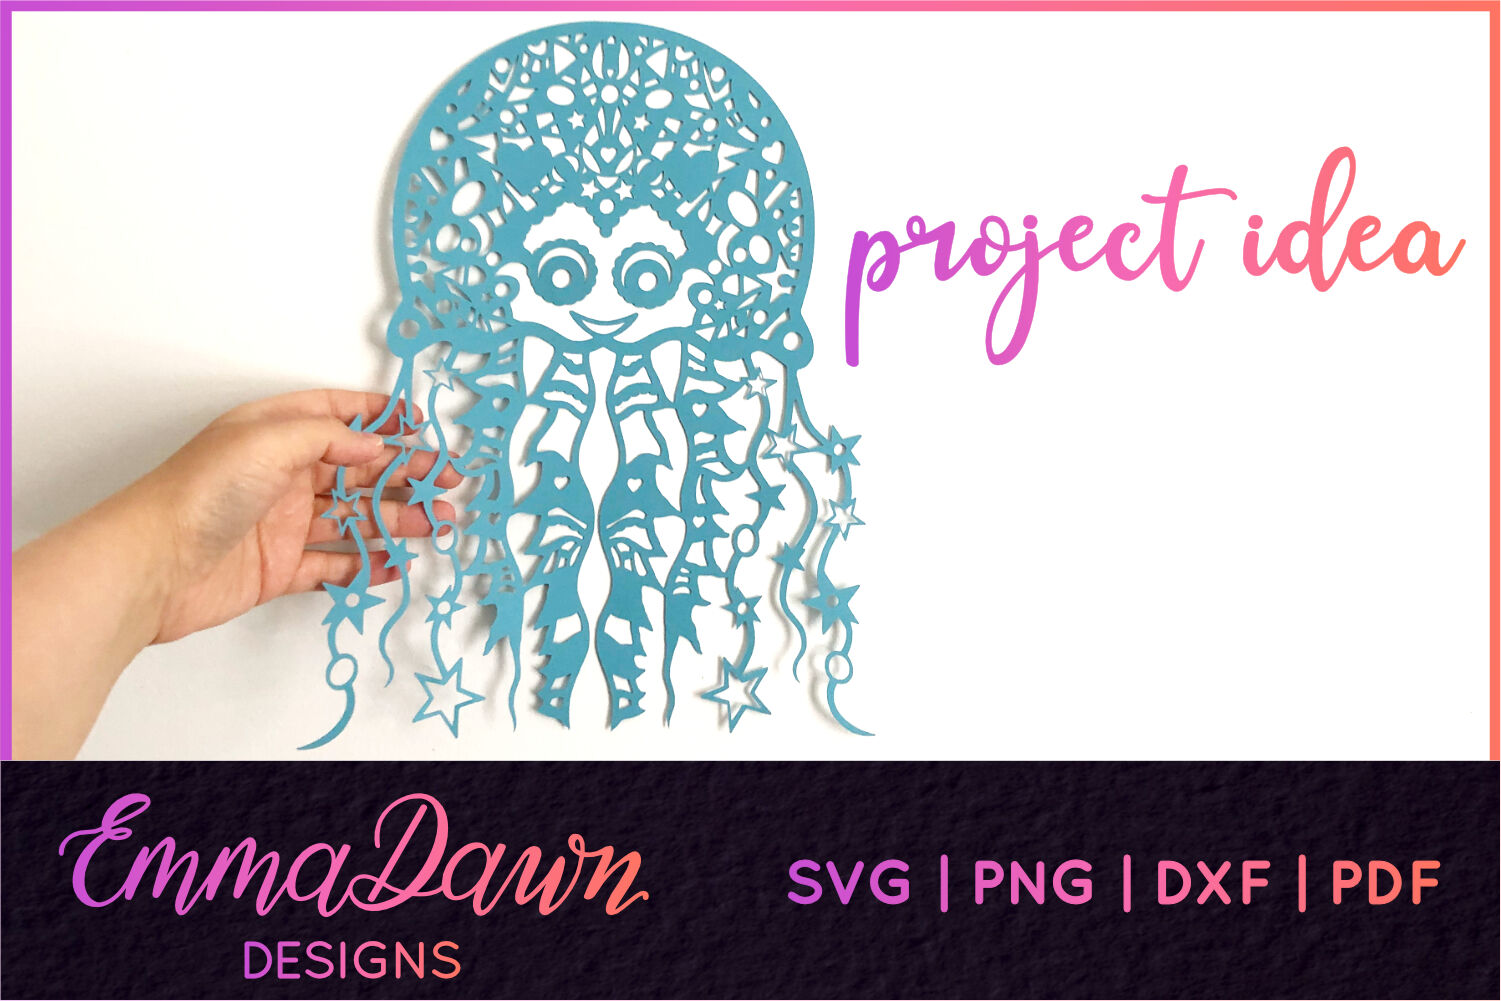 Download Joshua The Jellyfish Mandala Zentangle Design Svg By Emma Dawn Designs Thehungryjpeg Com